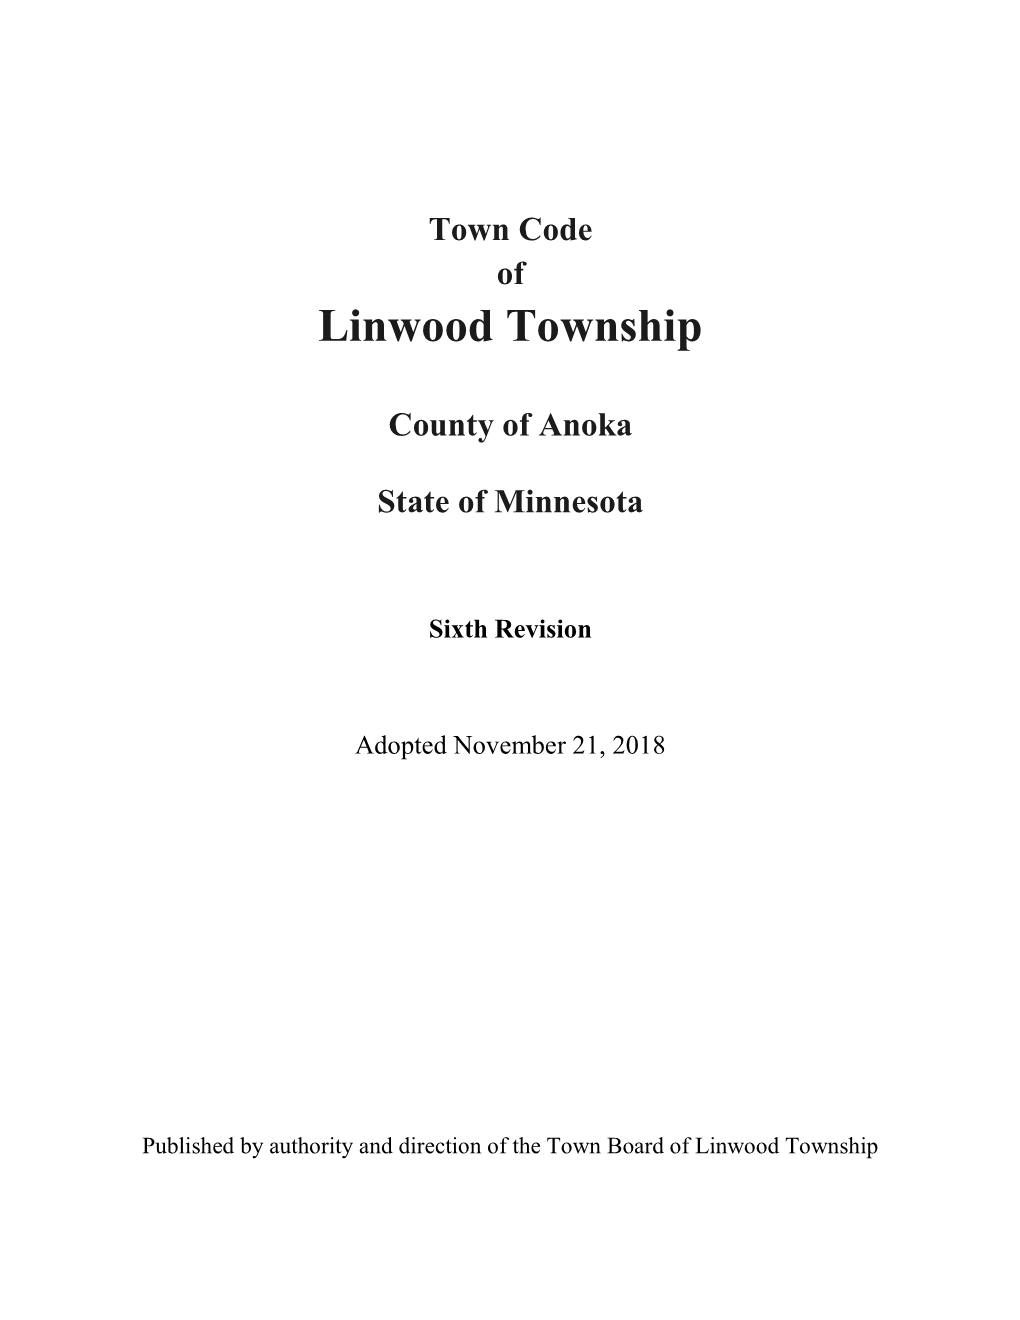 Linwood Town Code 2018